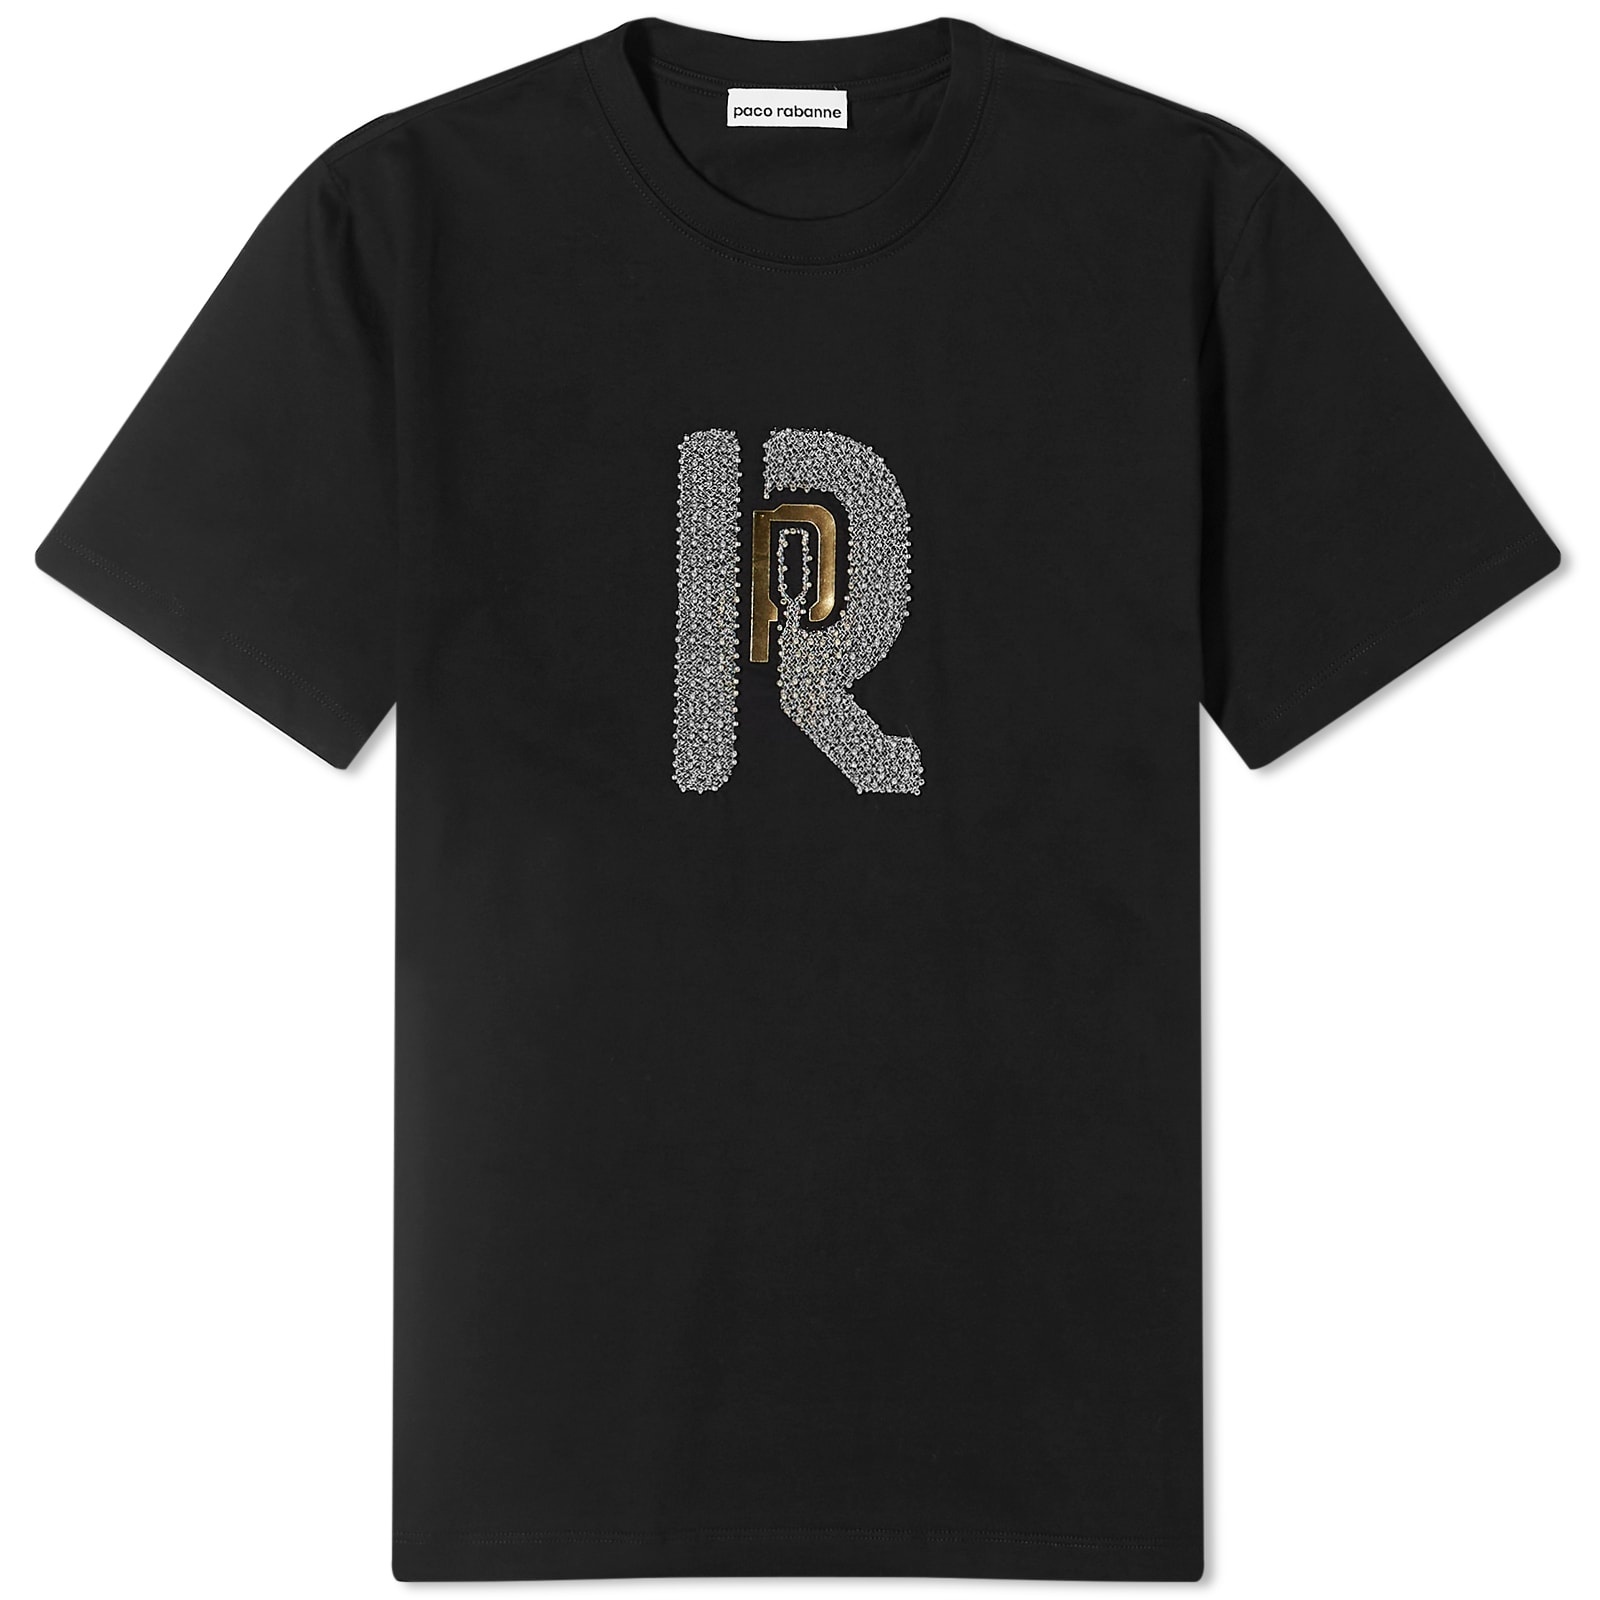 Paco Rabanne P Logo T-Shirt - 1